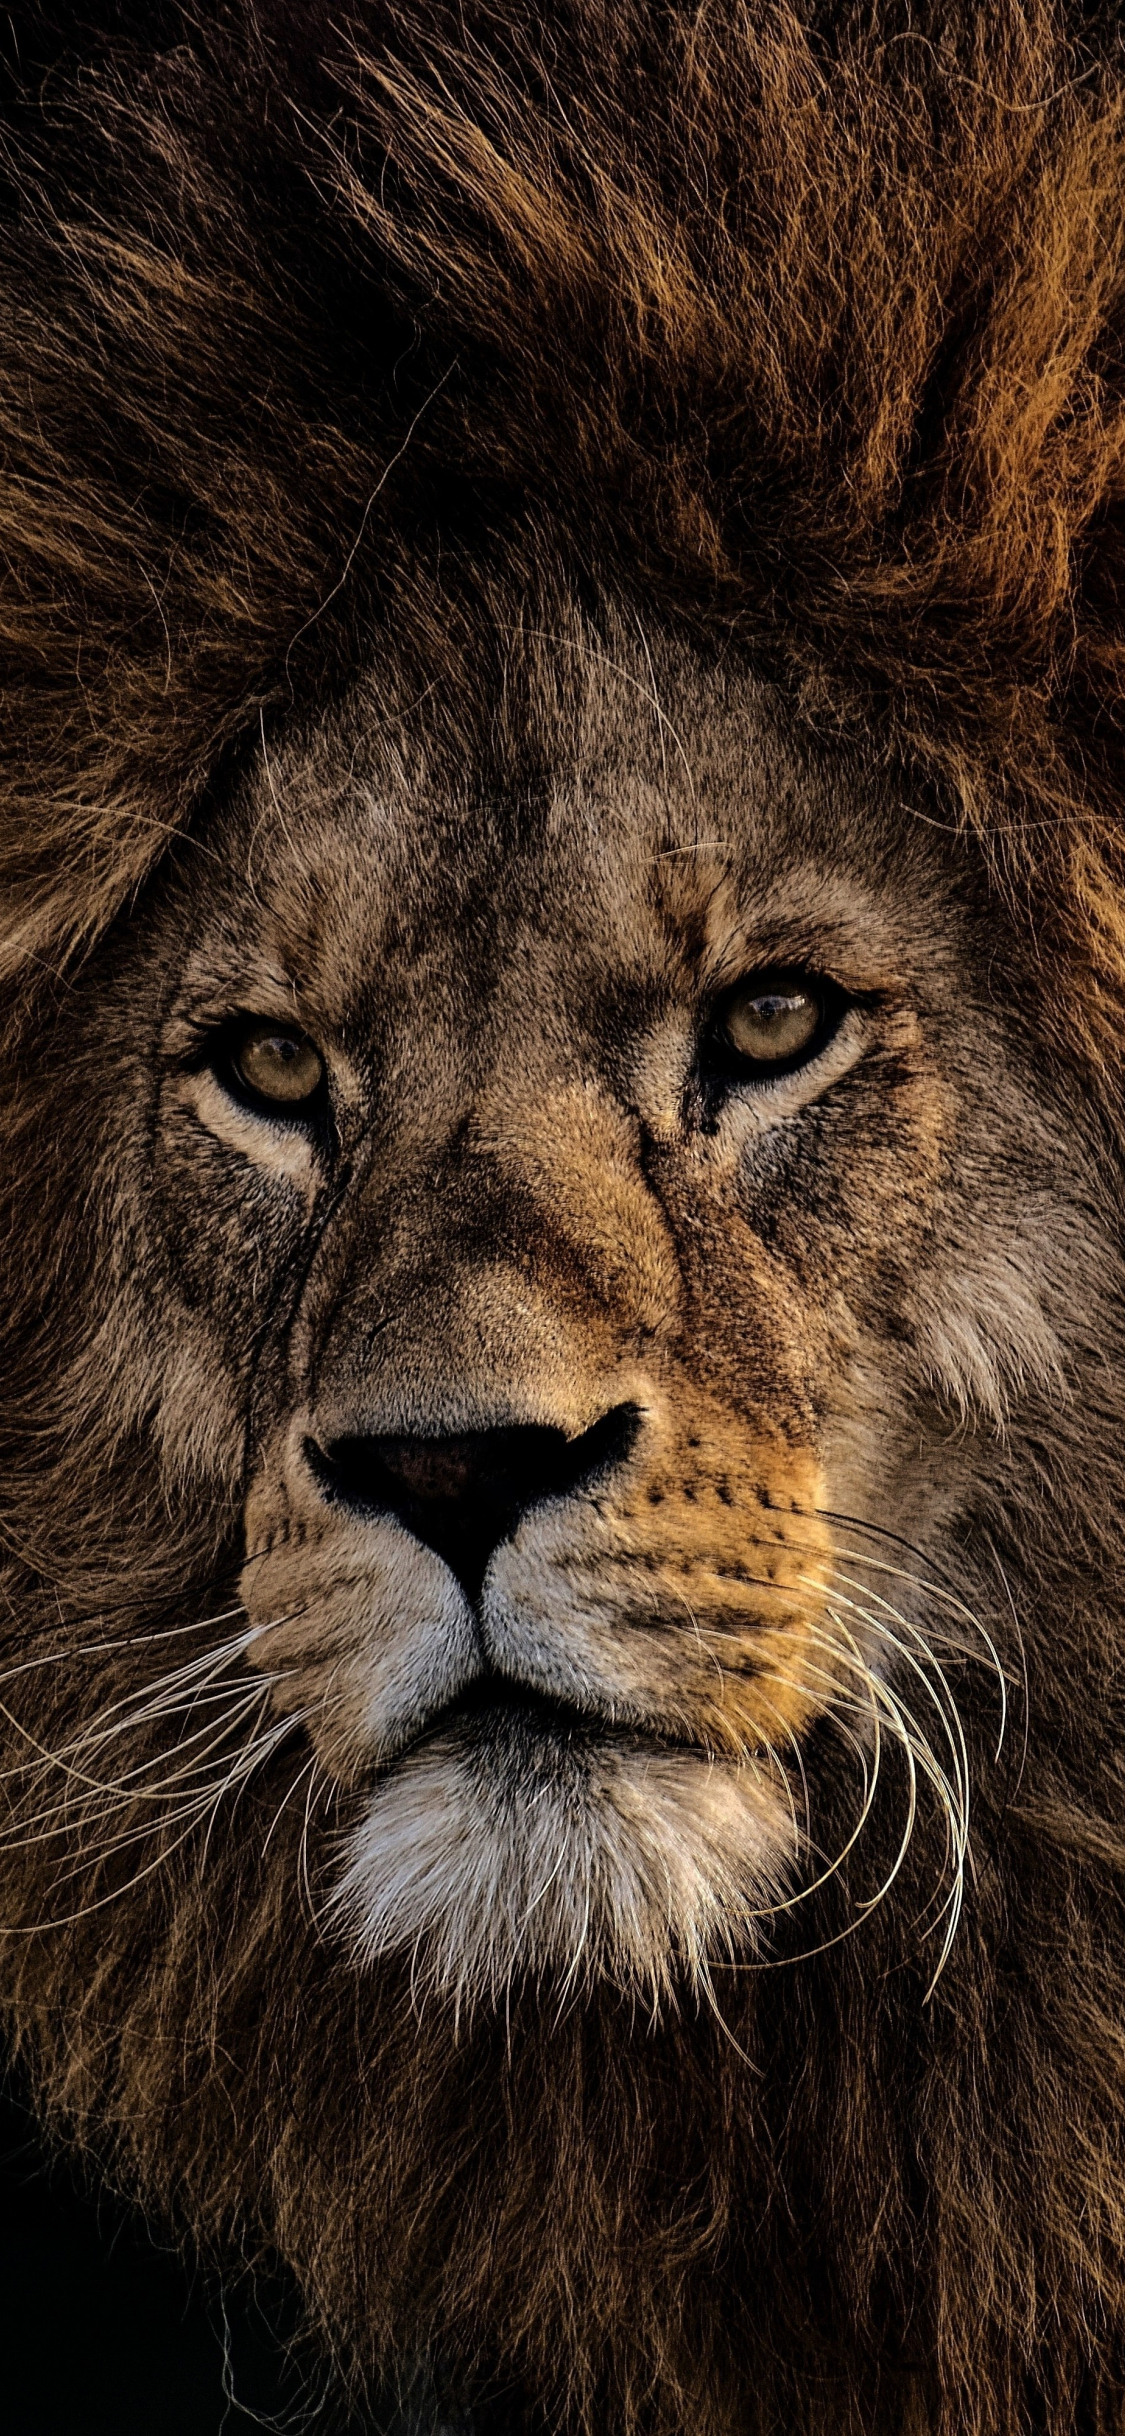 HD 4K lion king wallpaper Wallpapers for Mobile